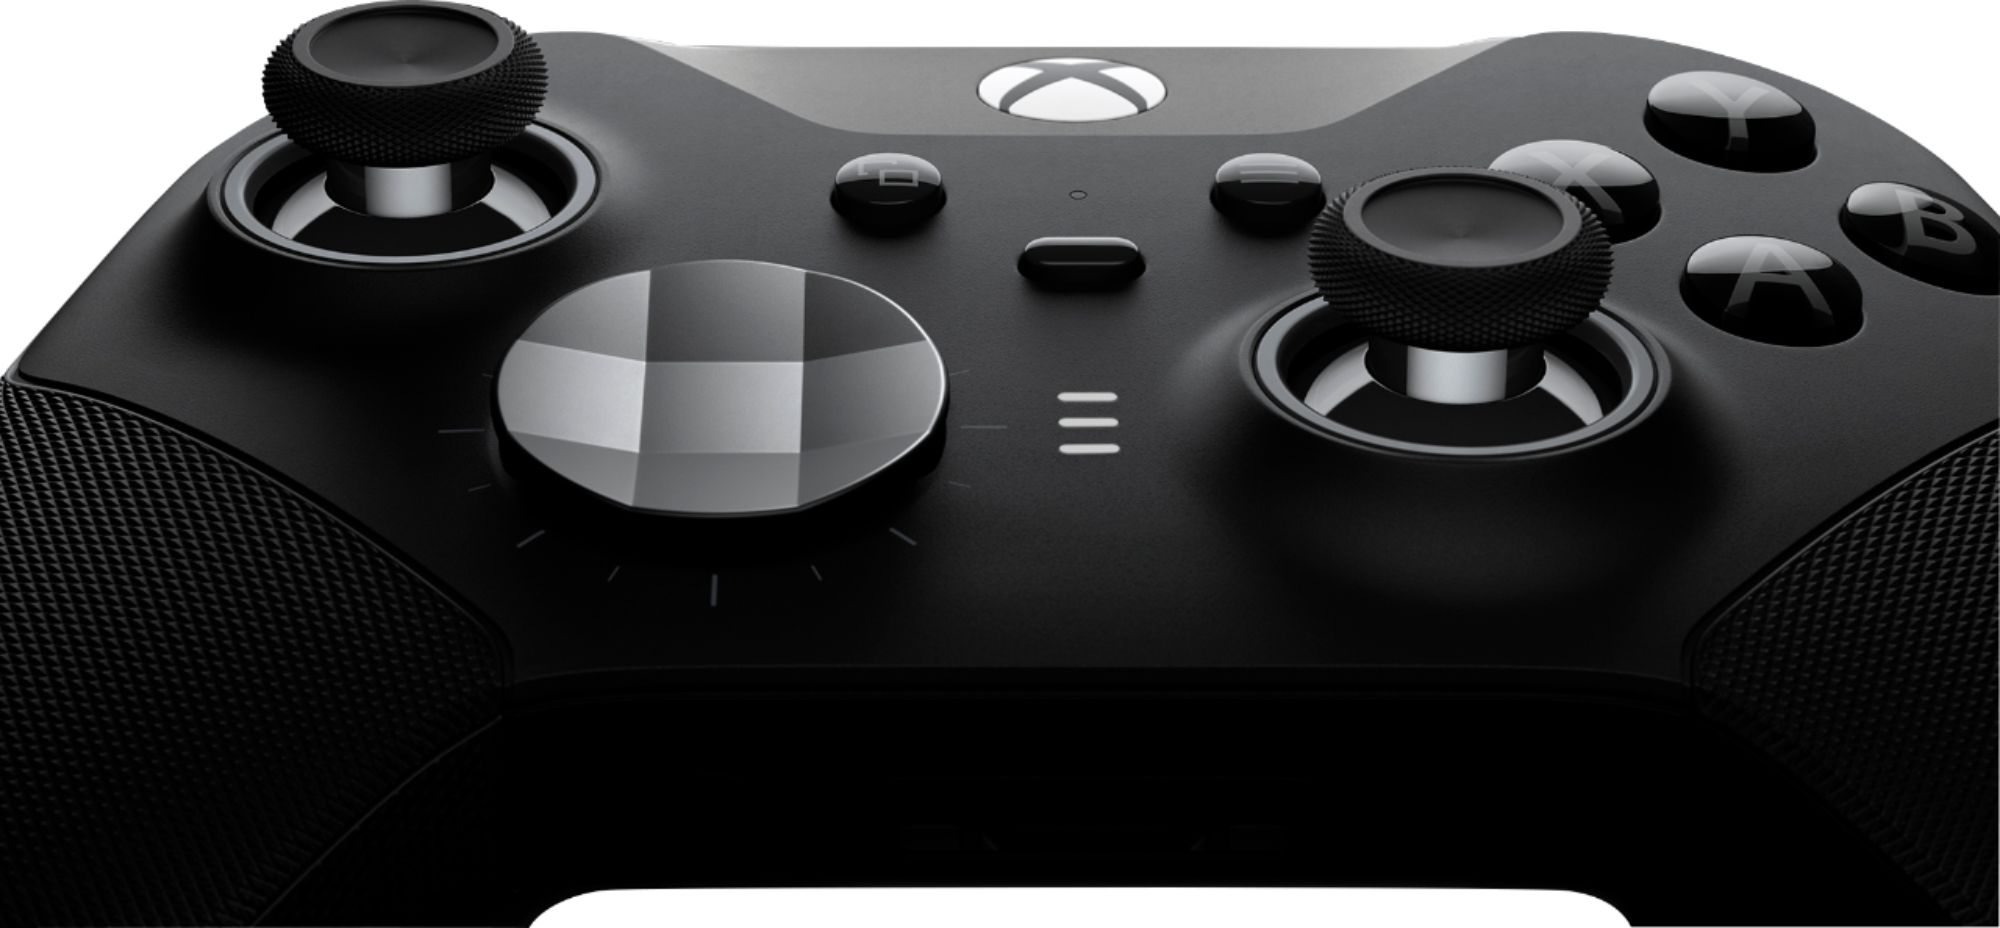 Microsoft Elite Series 2 Wireless Controller for Xbox One, Xbox 